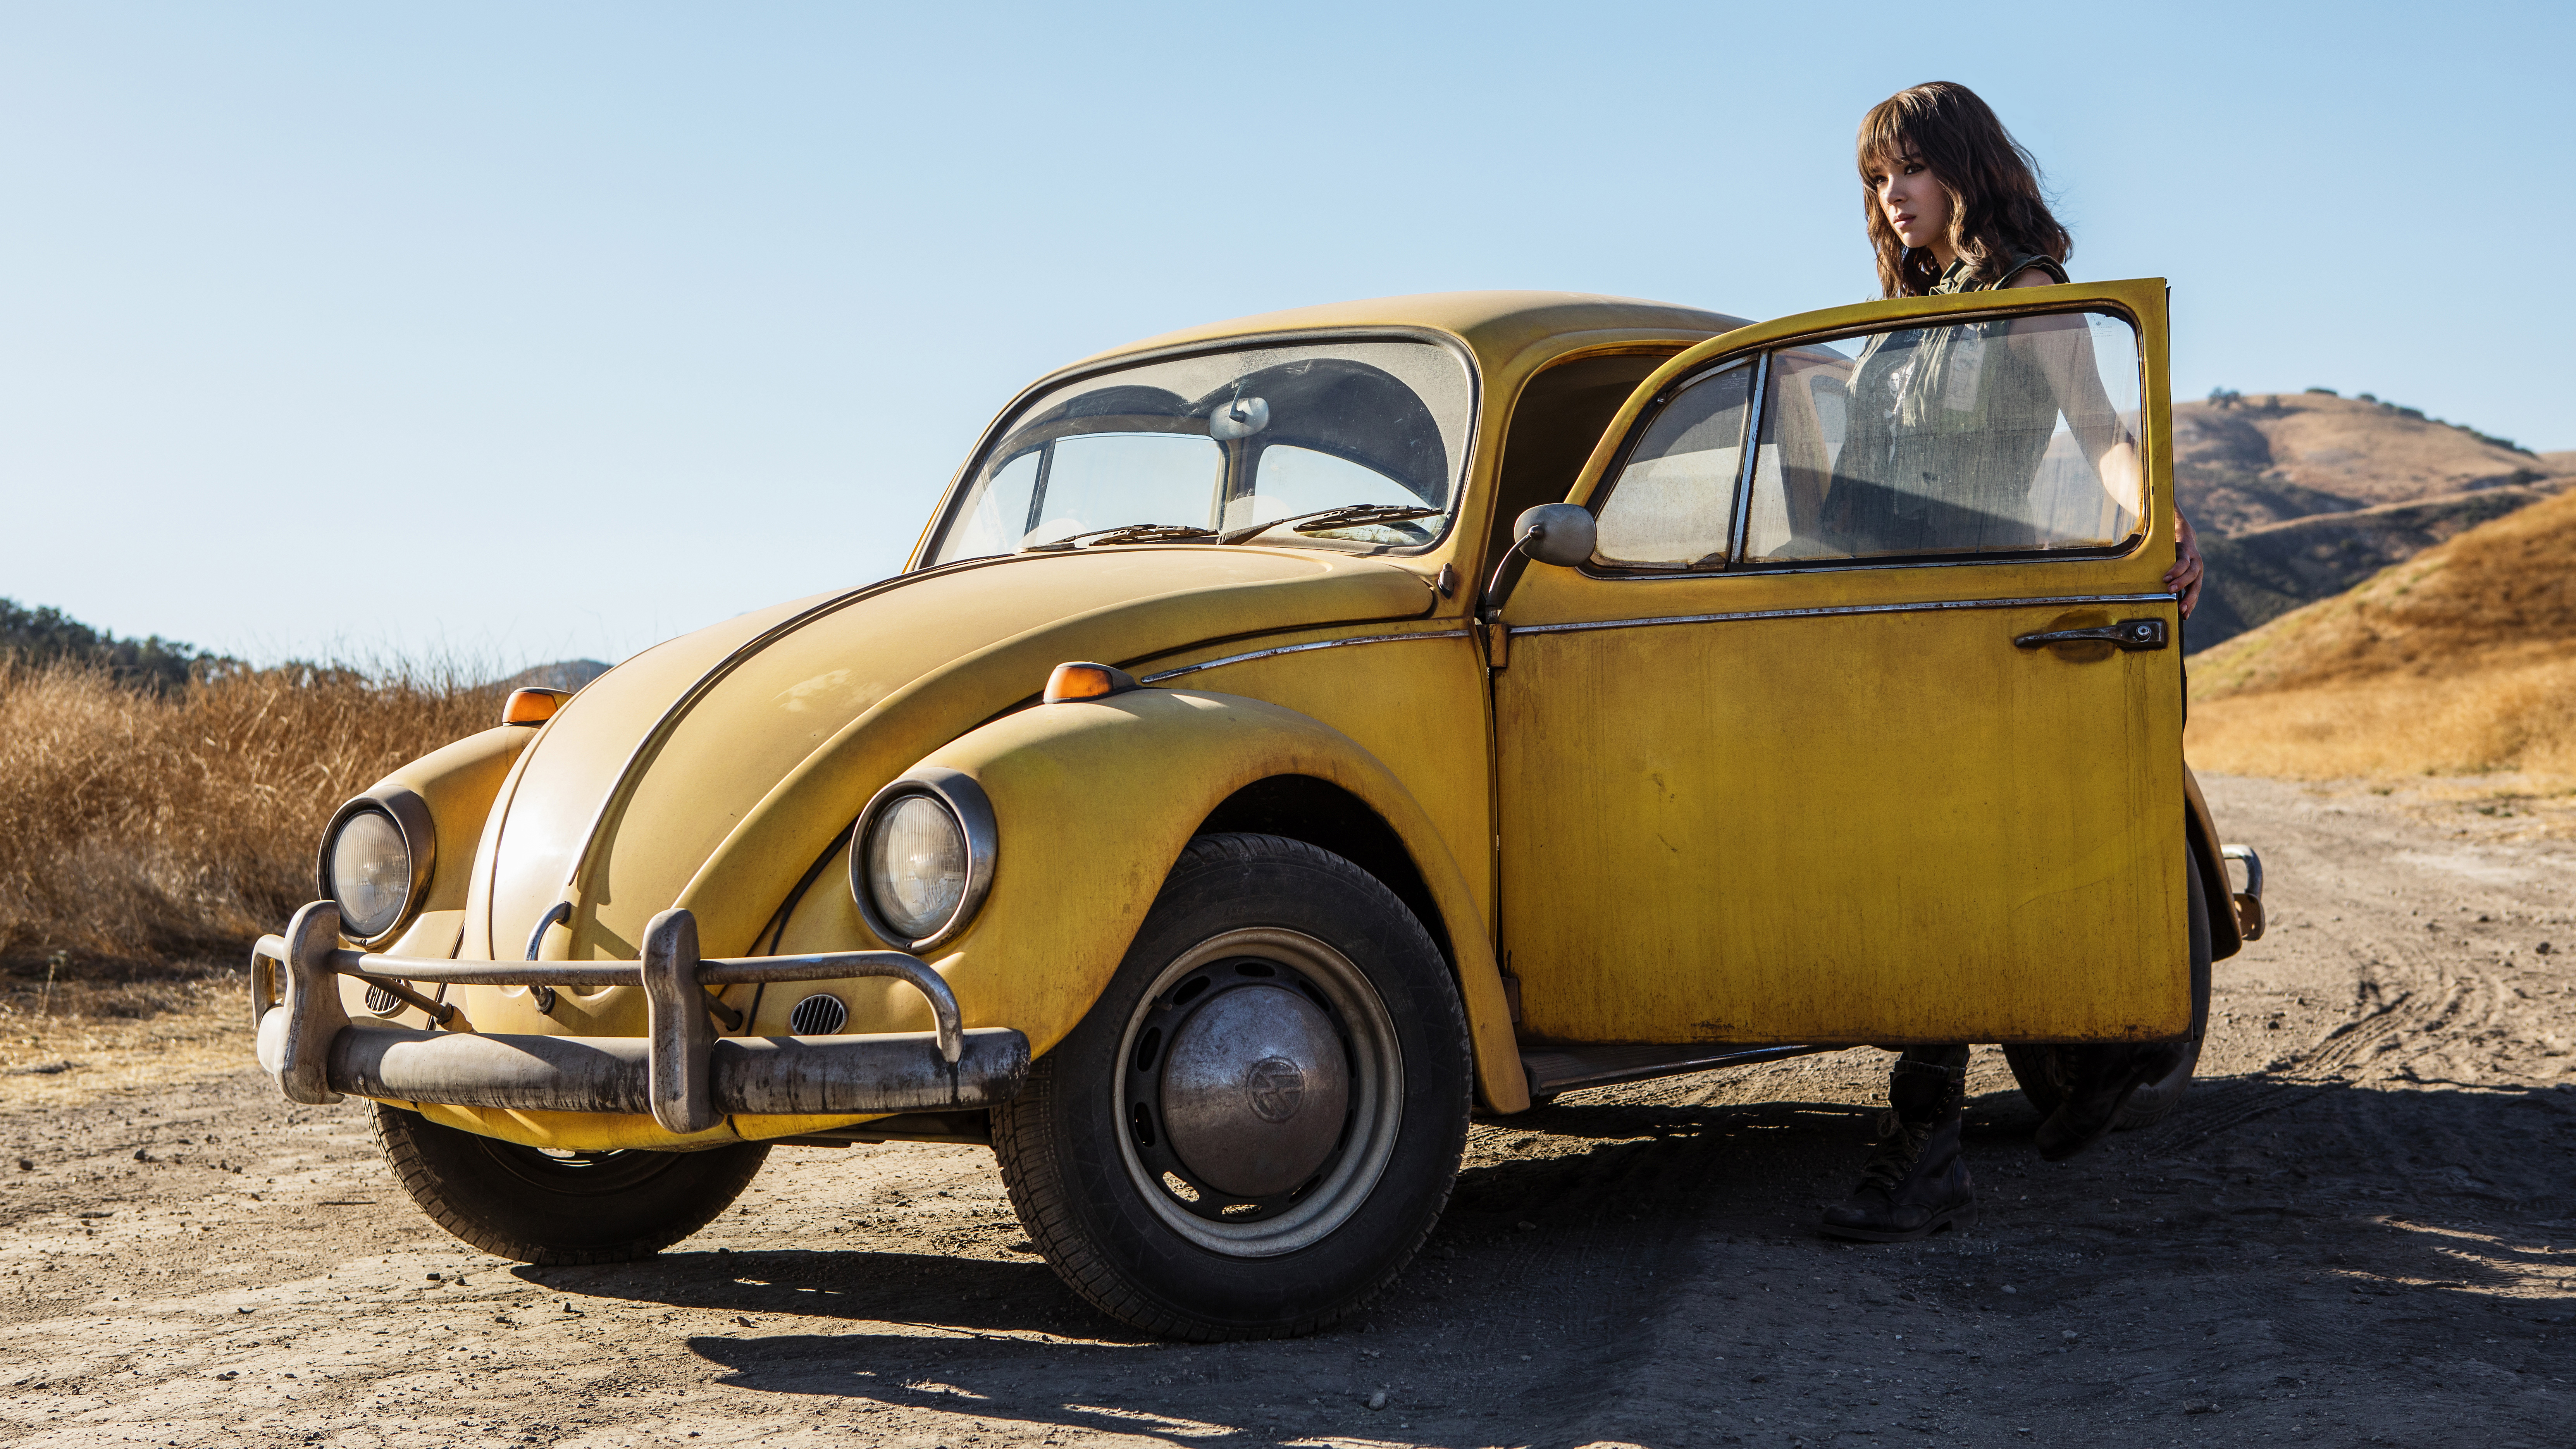 Hailee Steinfeld in Bumblebee Movie 2018 5K2787211020 - Hailee Steinfeld in Bumblebee Movie 2018 5K - Vikander, Steinfeld, Movie, Hailee, Bumblebee, 2018